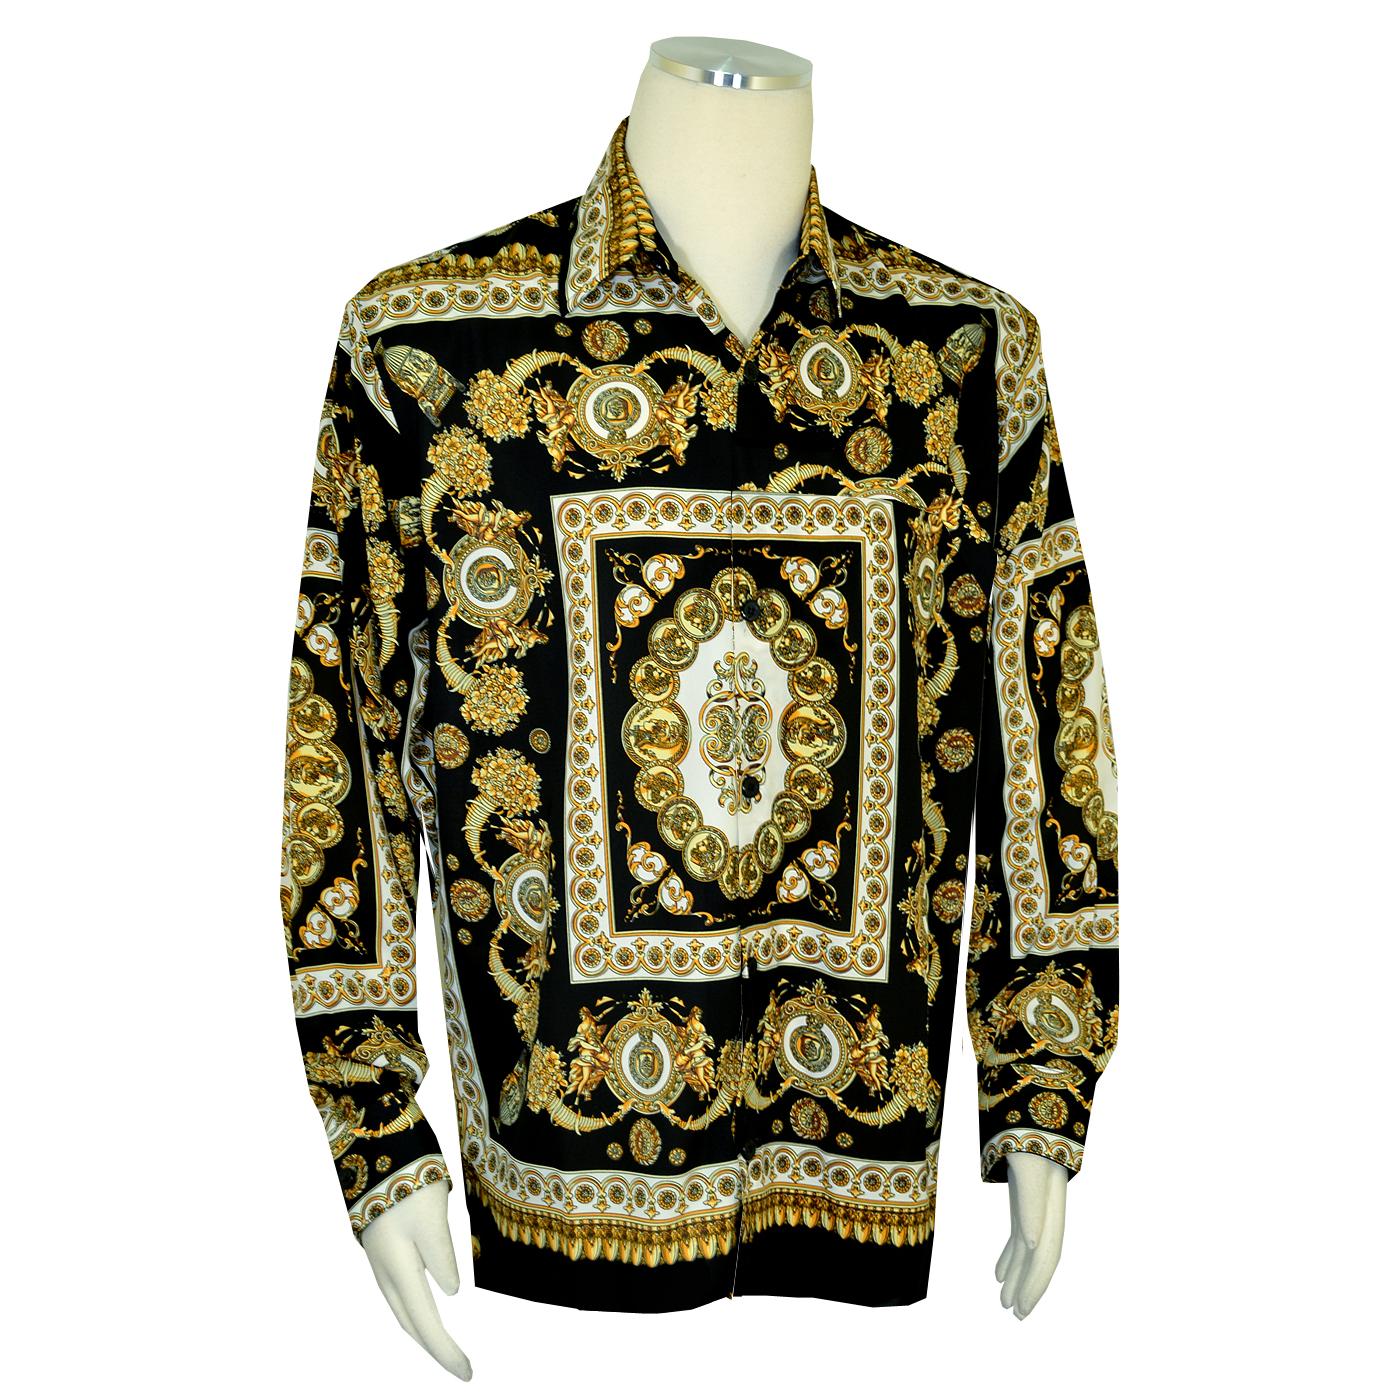 Pronti Black / Gold / White Greek Design Long Sleeve Shirt S6482 - $49. ...